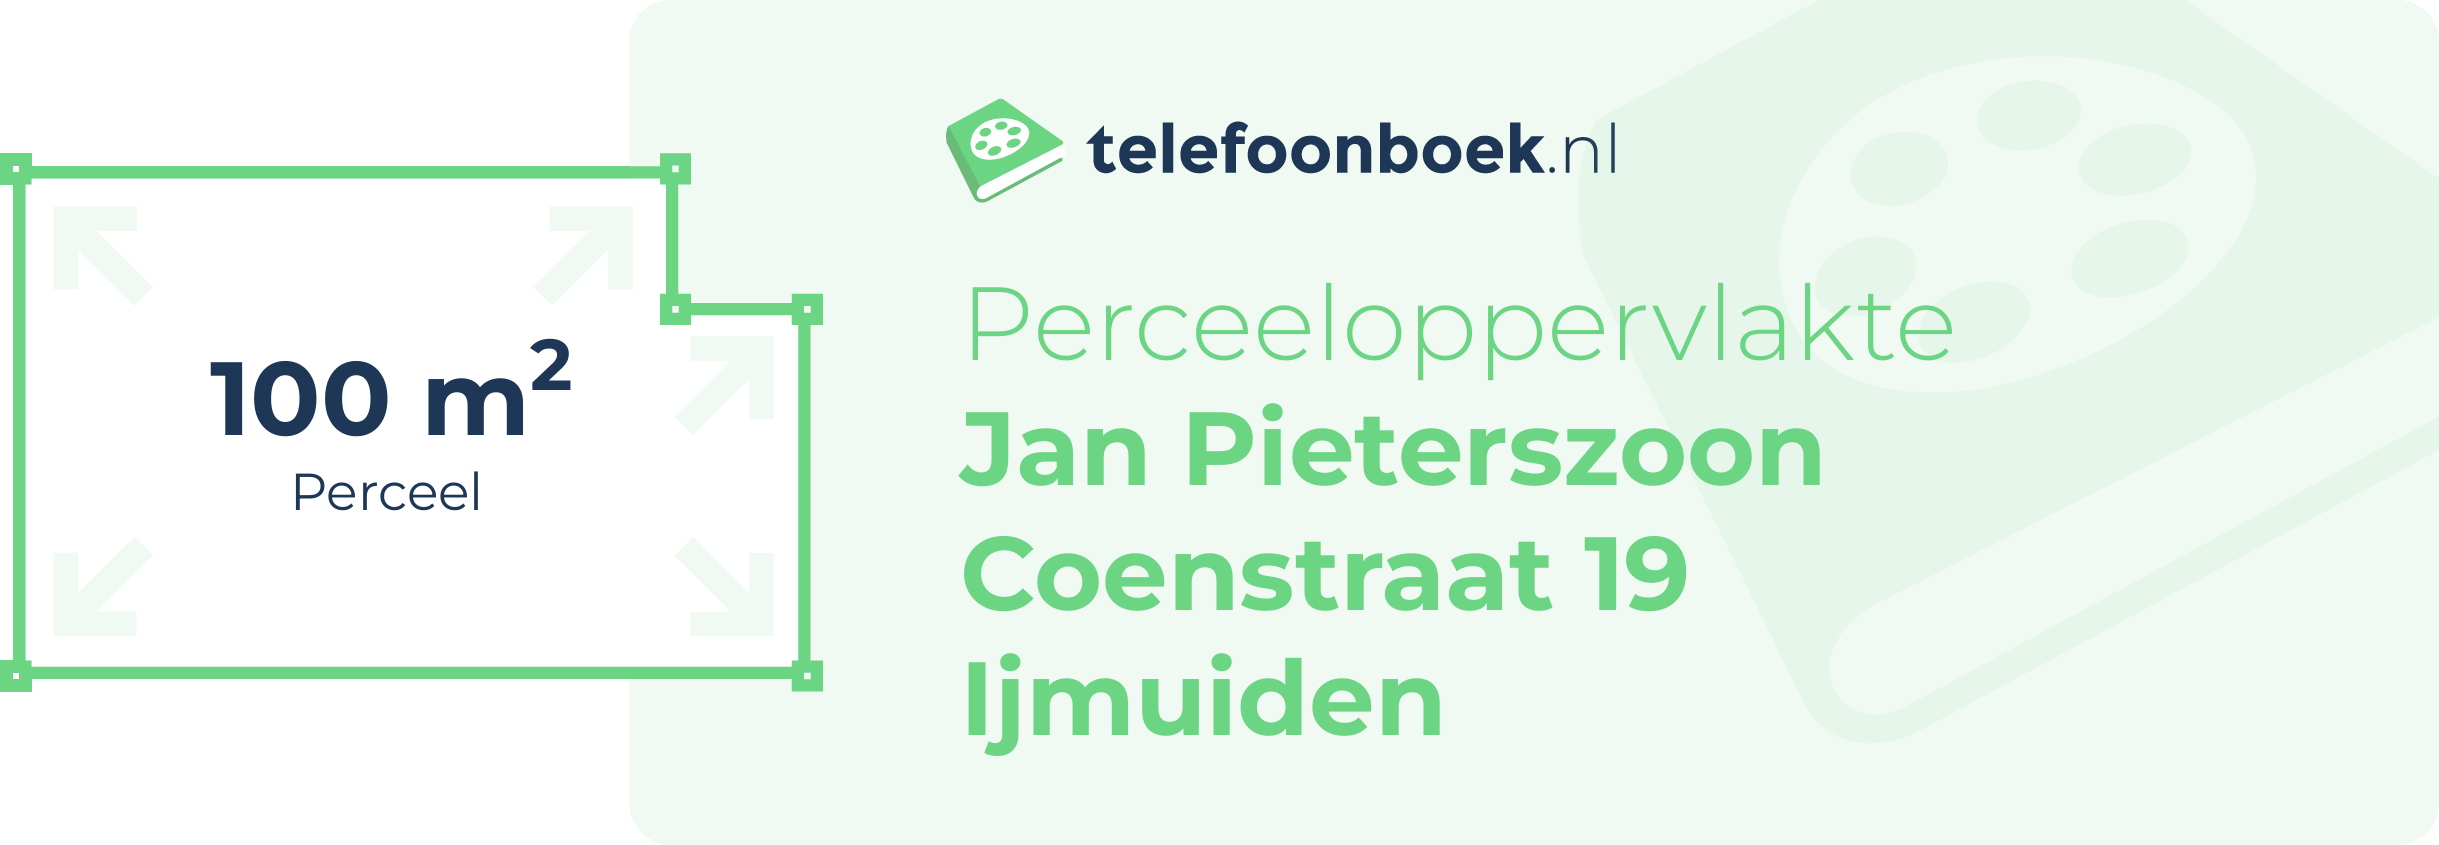 Perceeloppervlakte Jan Pieterszoon Coenstraat 19 Ijmuiden